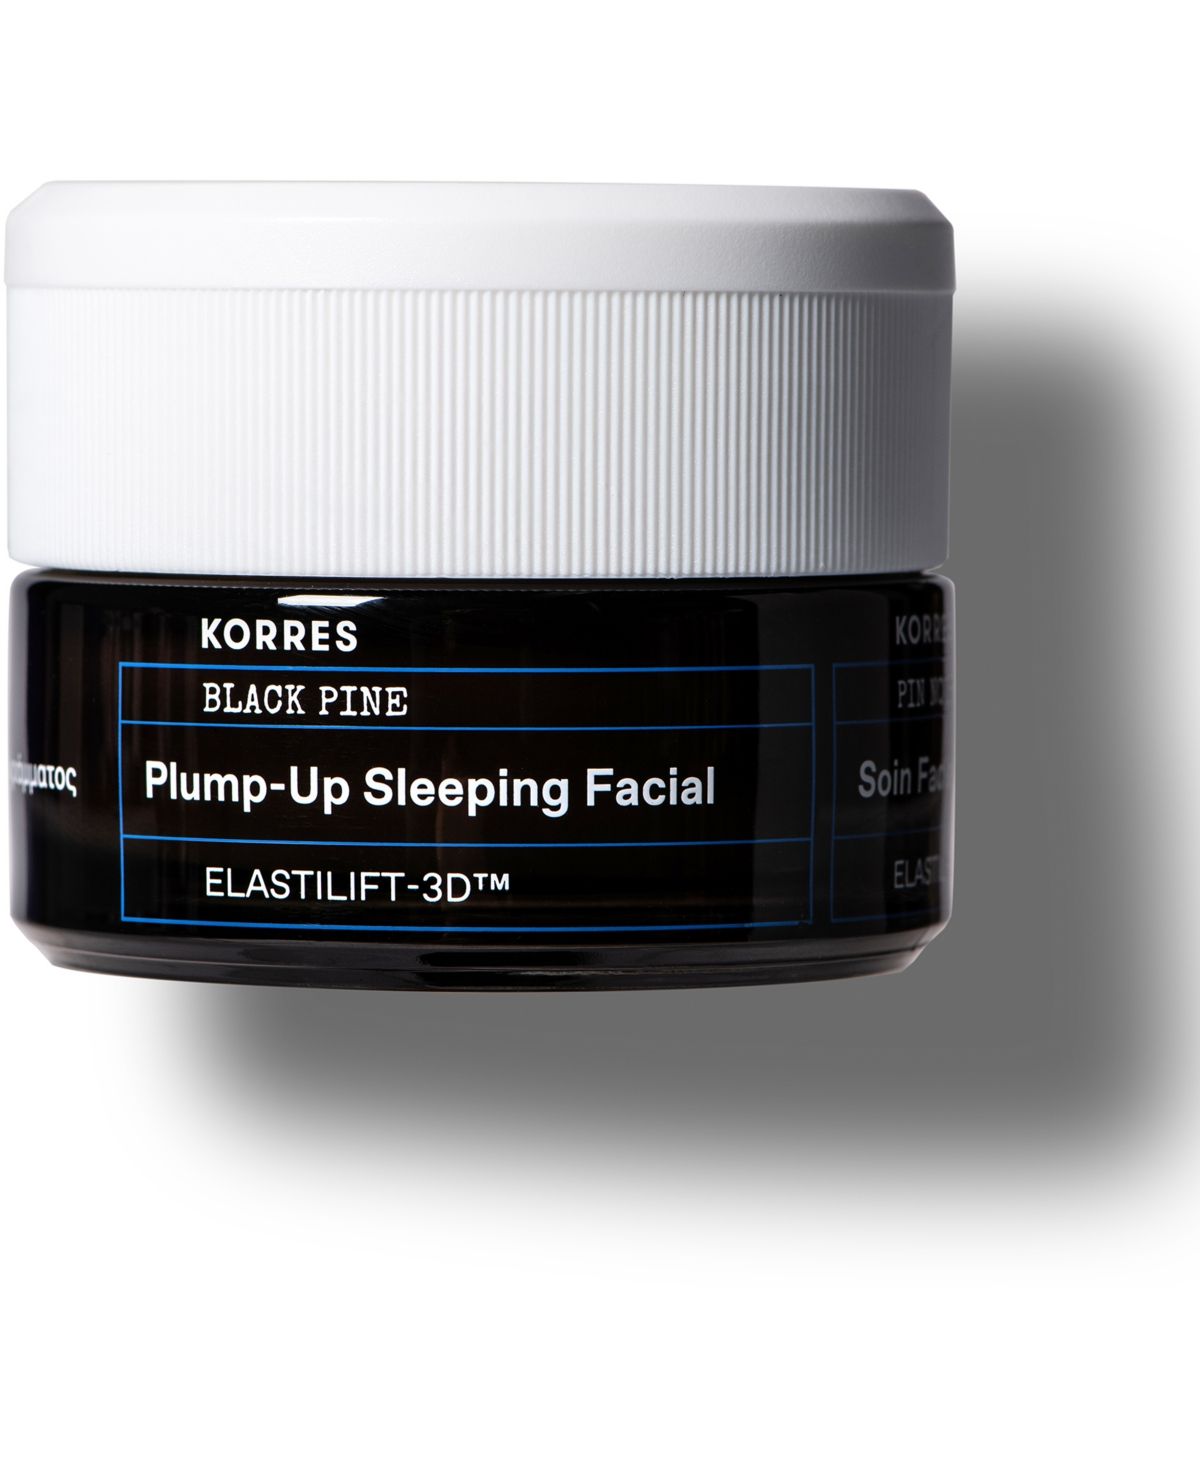 Korres Black Pine Plump-Up Sleeping Facial, 1.3-oz. | Macys (US)